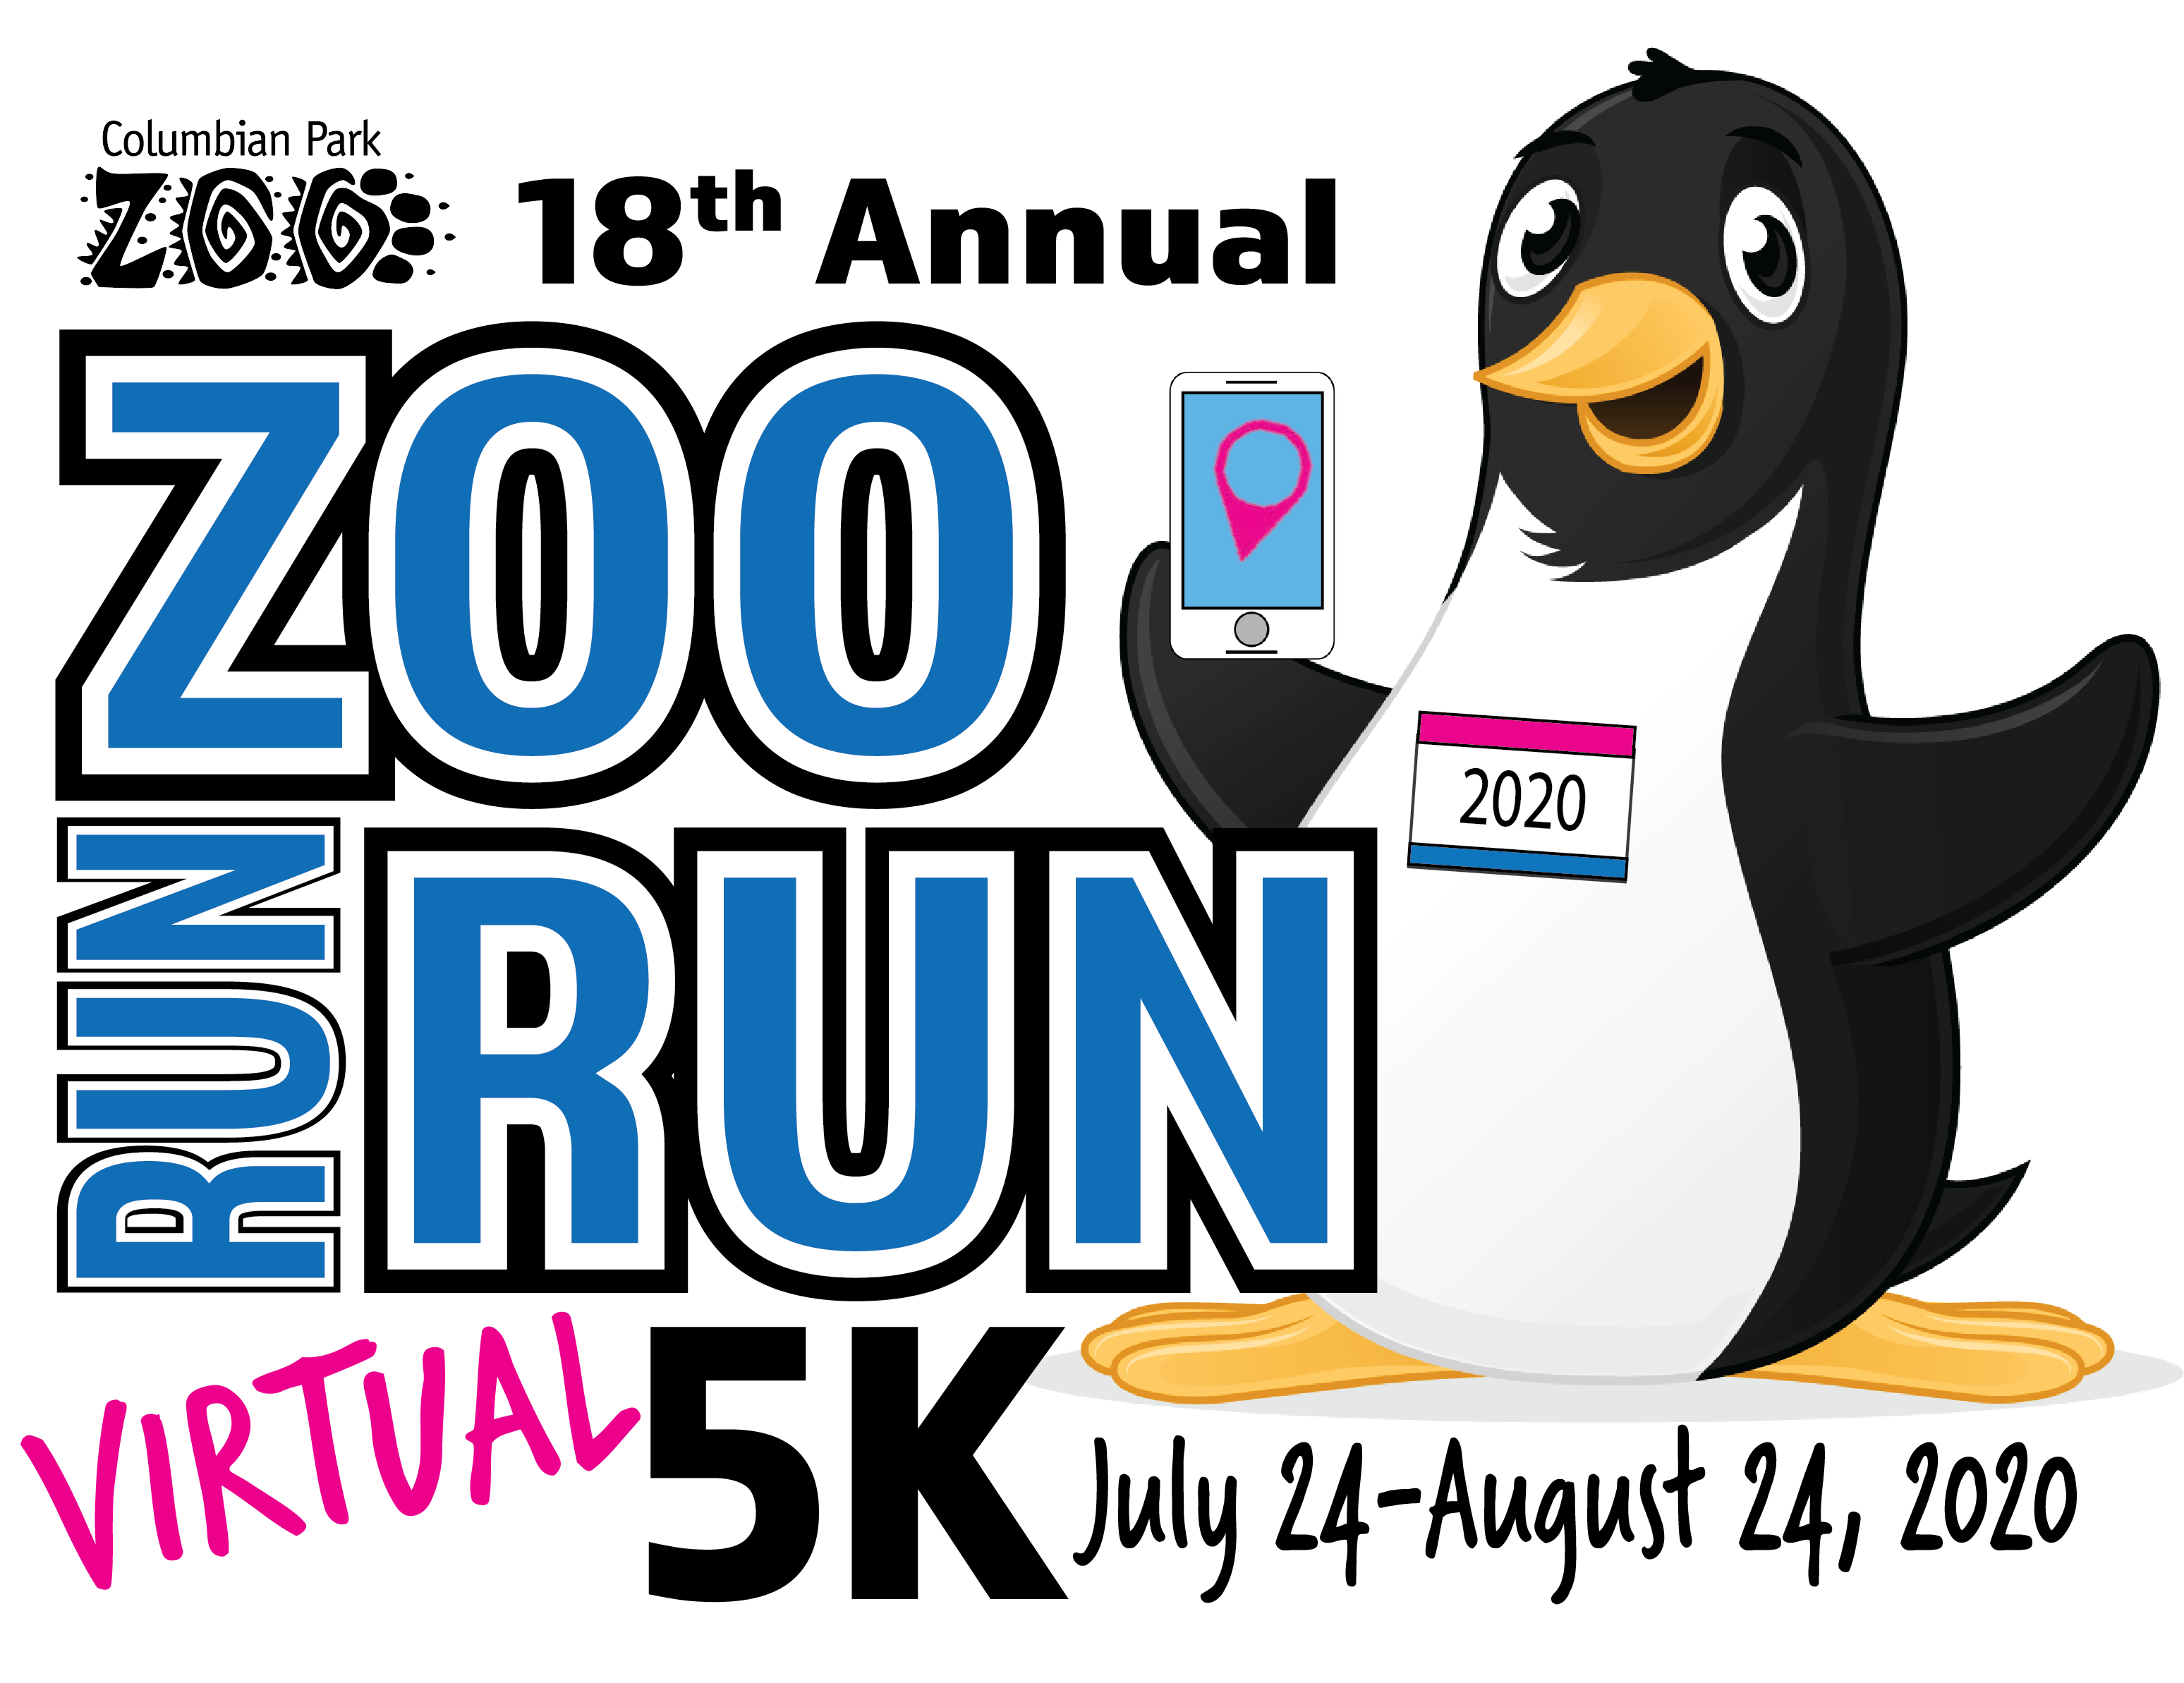 Zoo Run Run Virtual 5K in Lafayette, IN Details, Registration, and